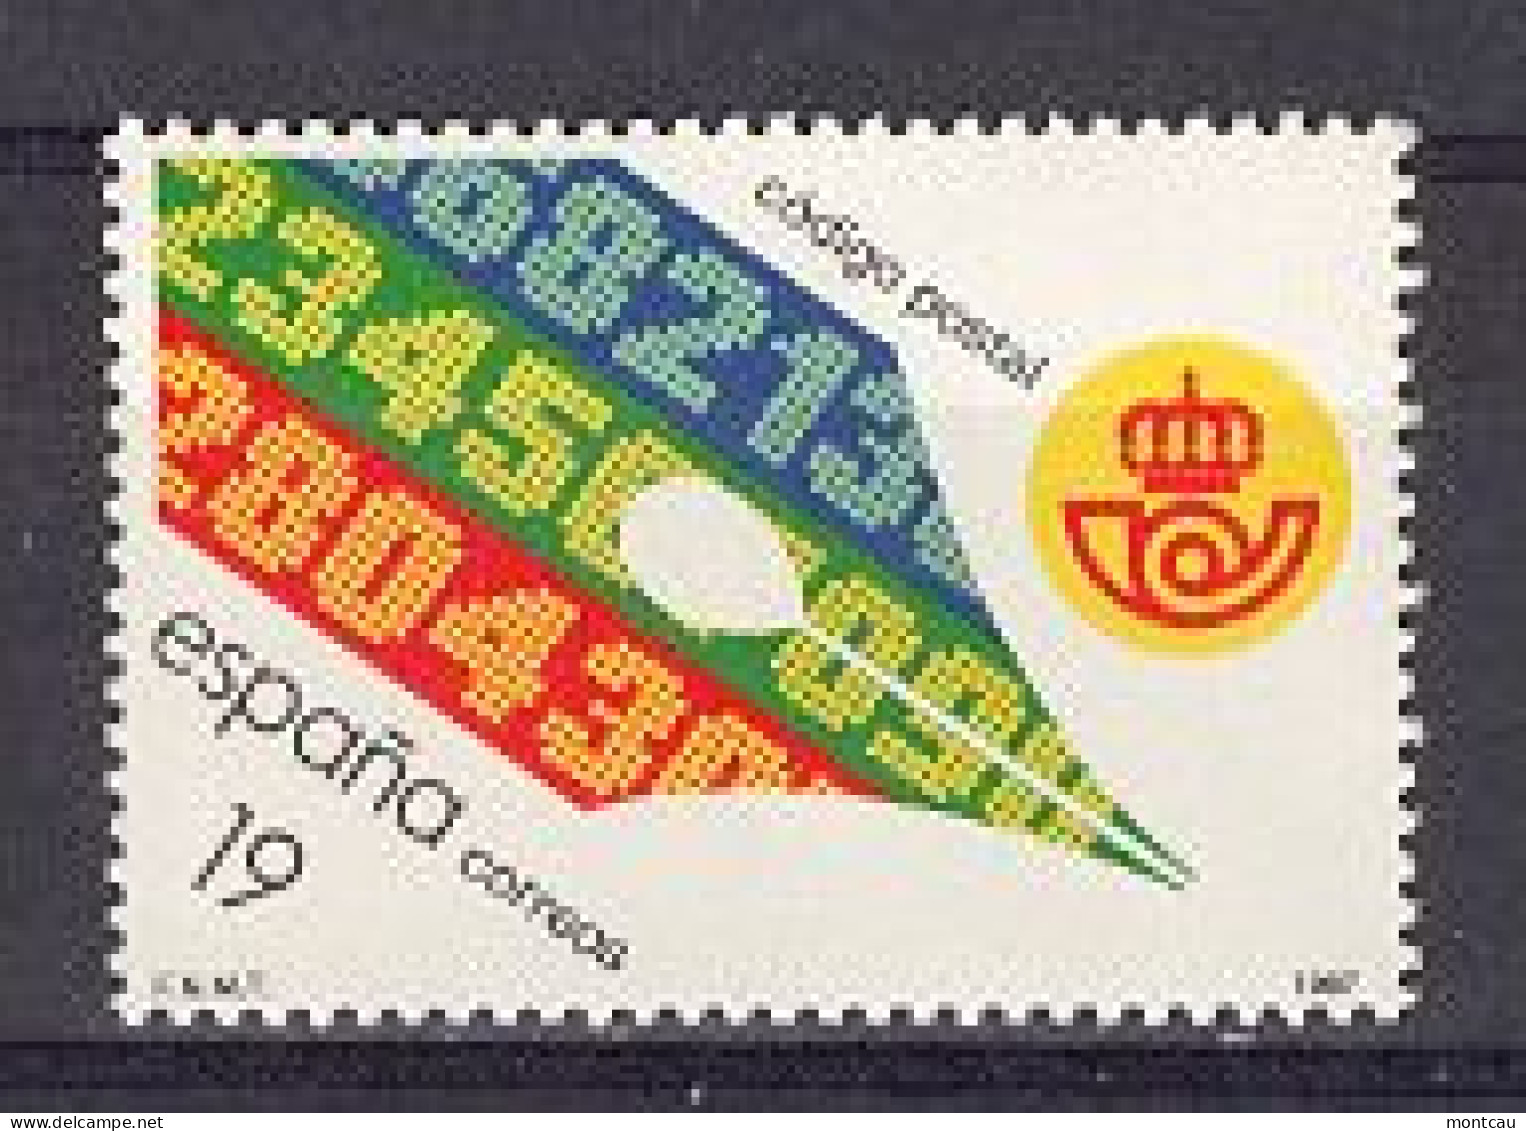 Spain 1987. Codigo Postal Ed 2906 (**) - Zipcode